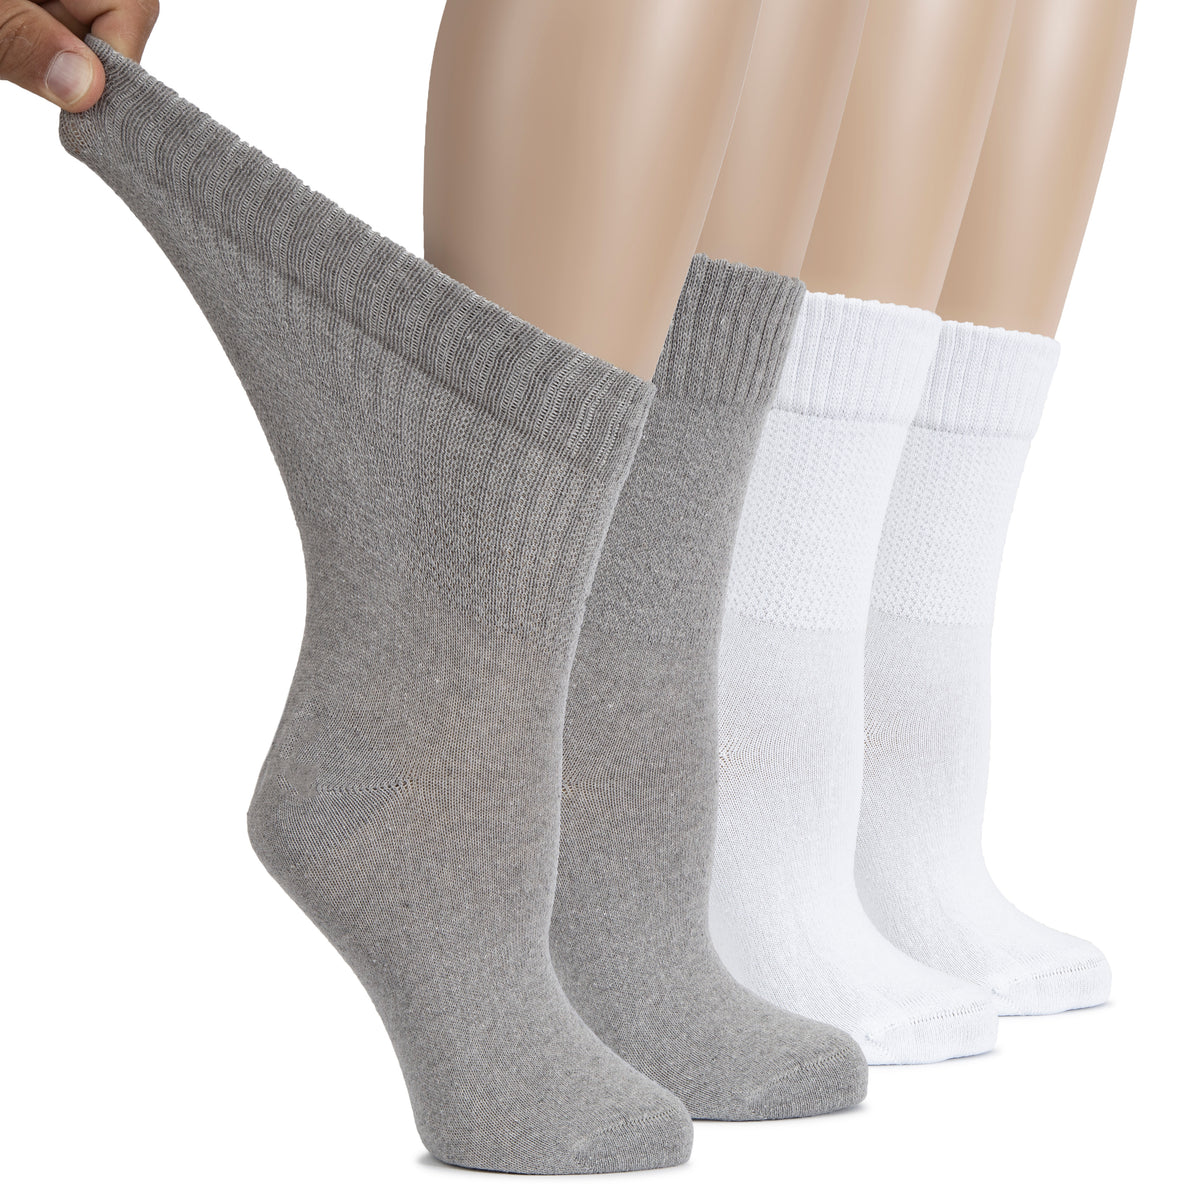 Hugh Ugoli Cotton Diabetic Women's Socks, Crew, Loose, Wide Stretchy, Thin, Seamless Toe and Non-Binding Top, 4 Pairs | Shoe Size: 9-12 | IndigoBlue / LightGrey